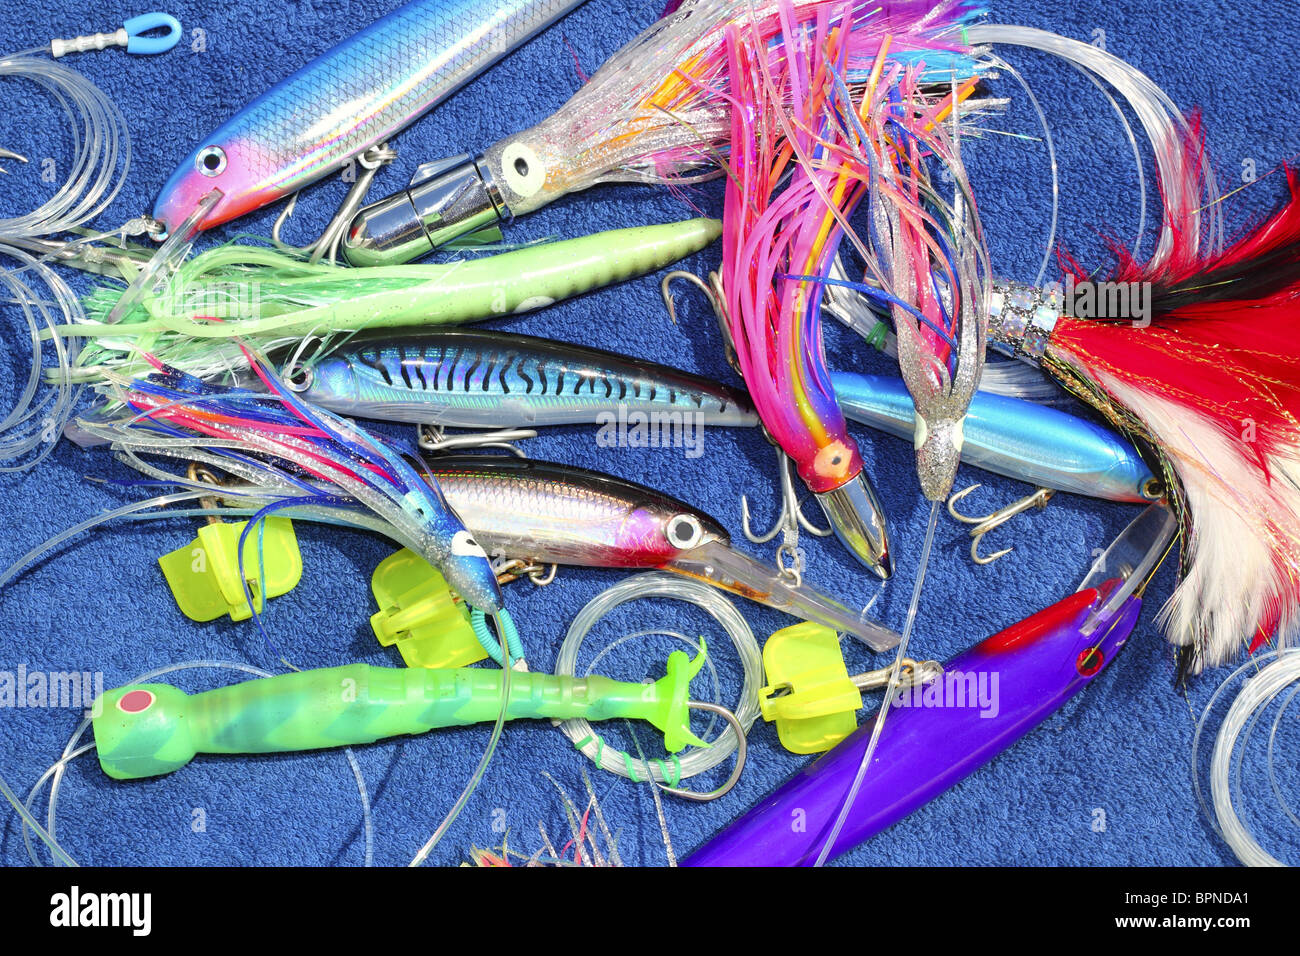 big game fishing hook lures for tuna marlin wahoo saltwater ocean